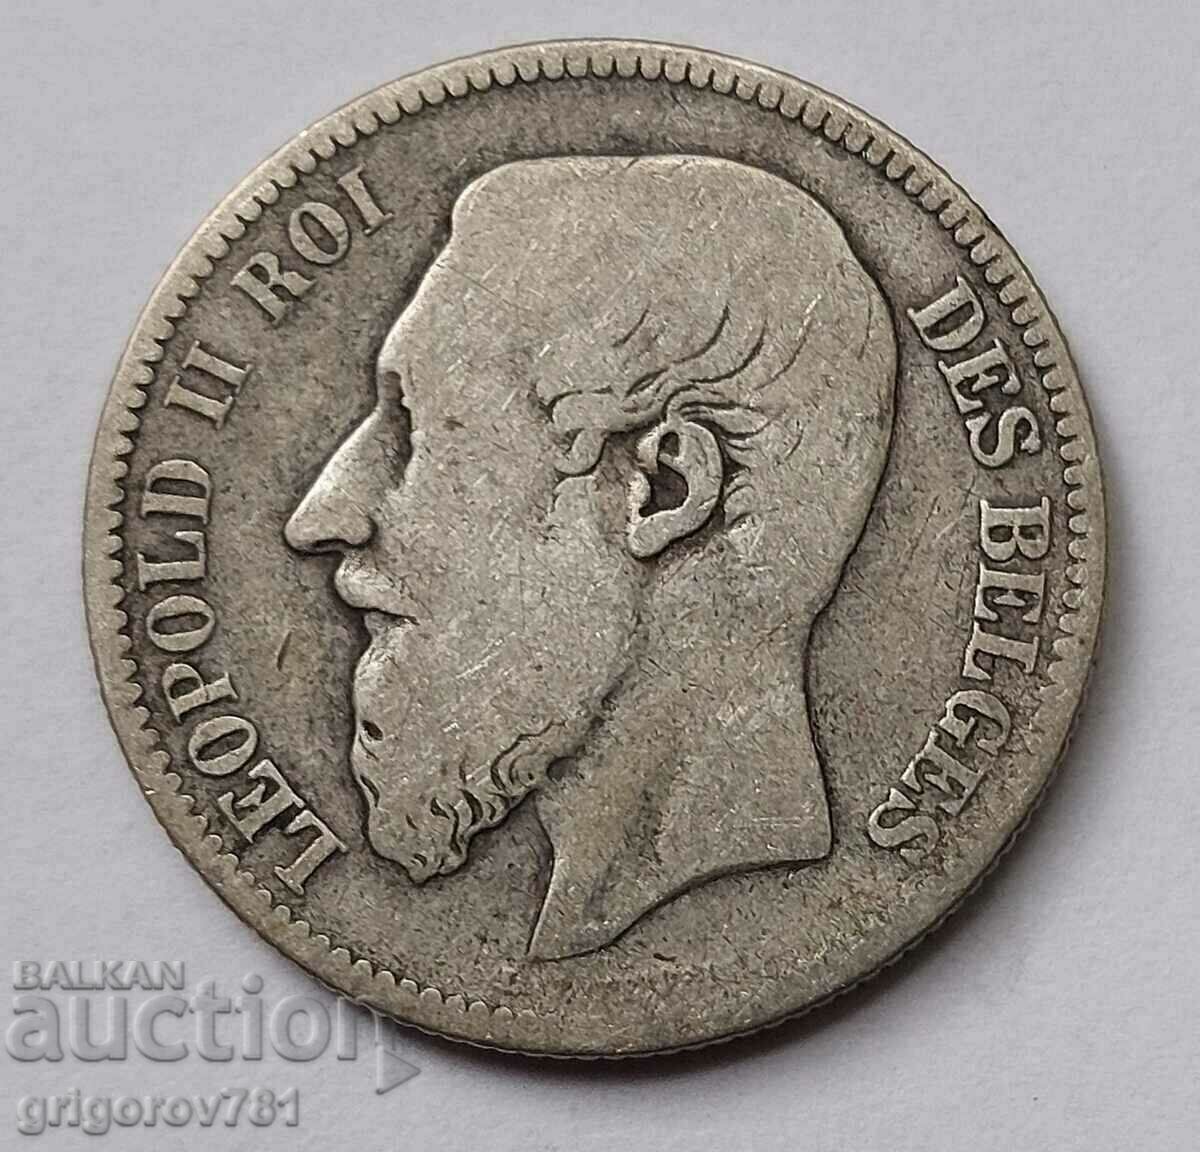 2 Franci Argint Belgia 1867 - Moneda de argint #159